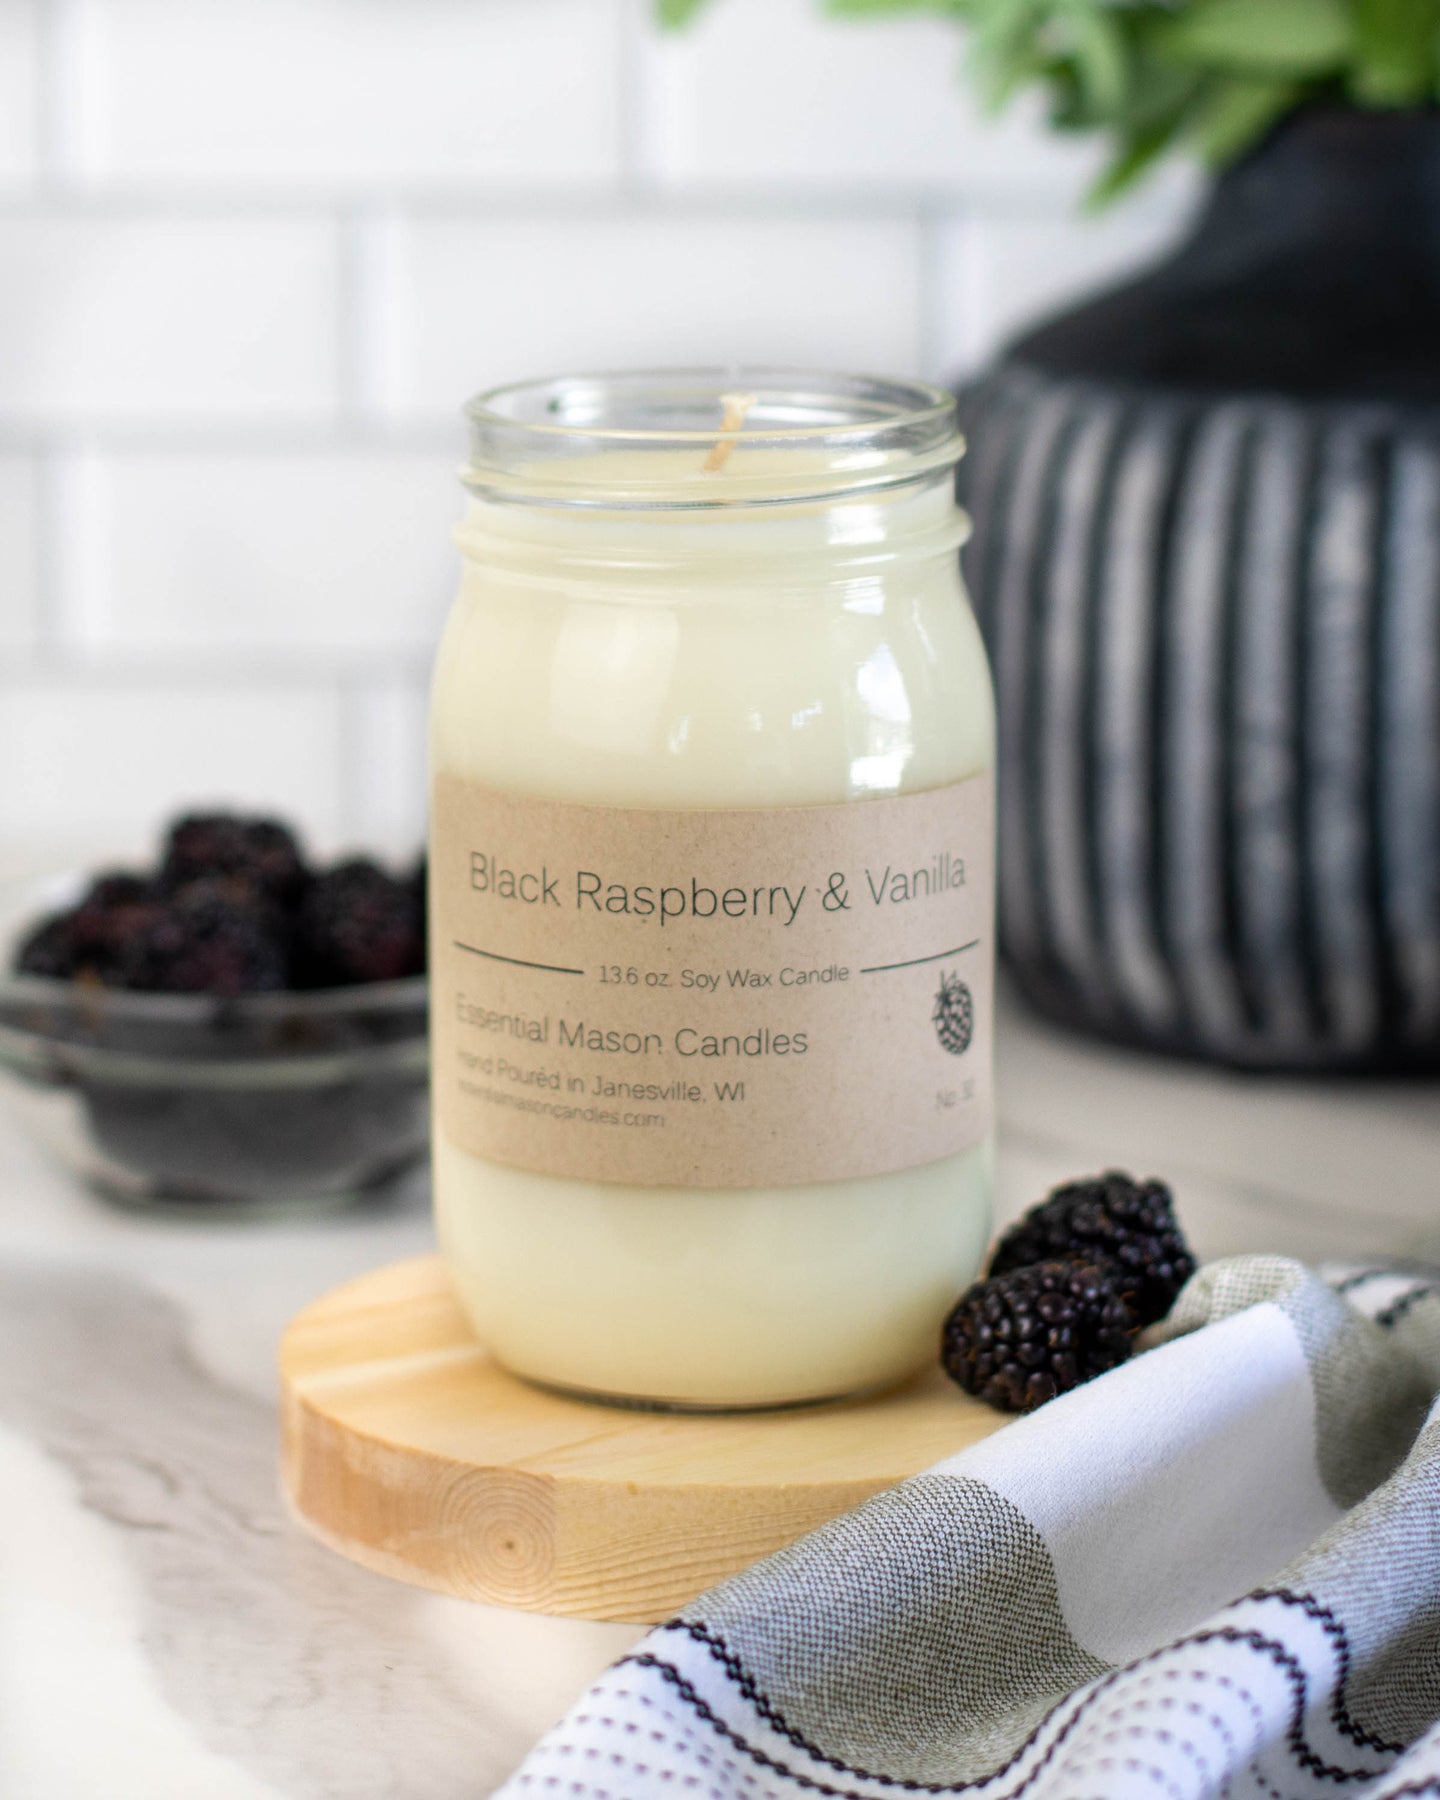 Black Raspberry Vanilla Fragrance Oil – Pro Candle Supply